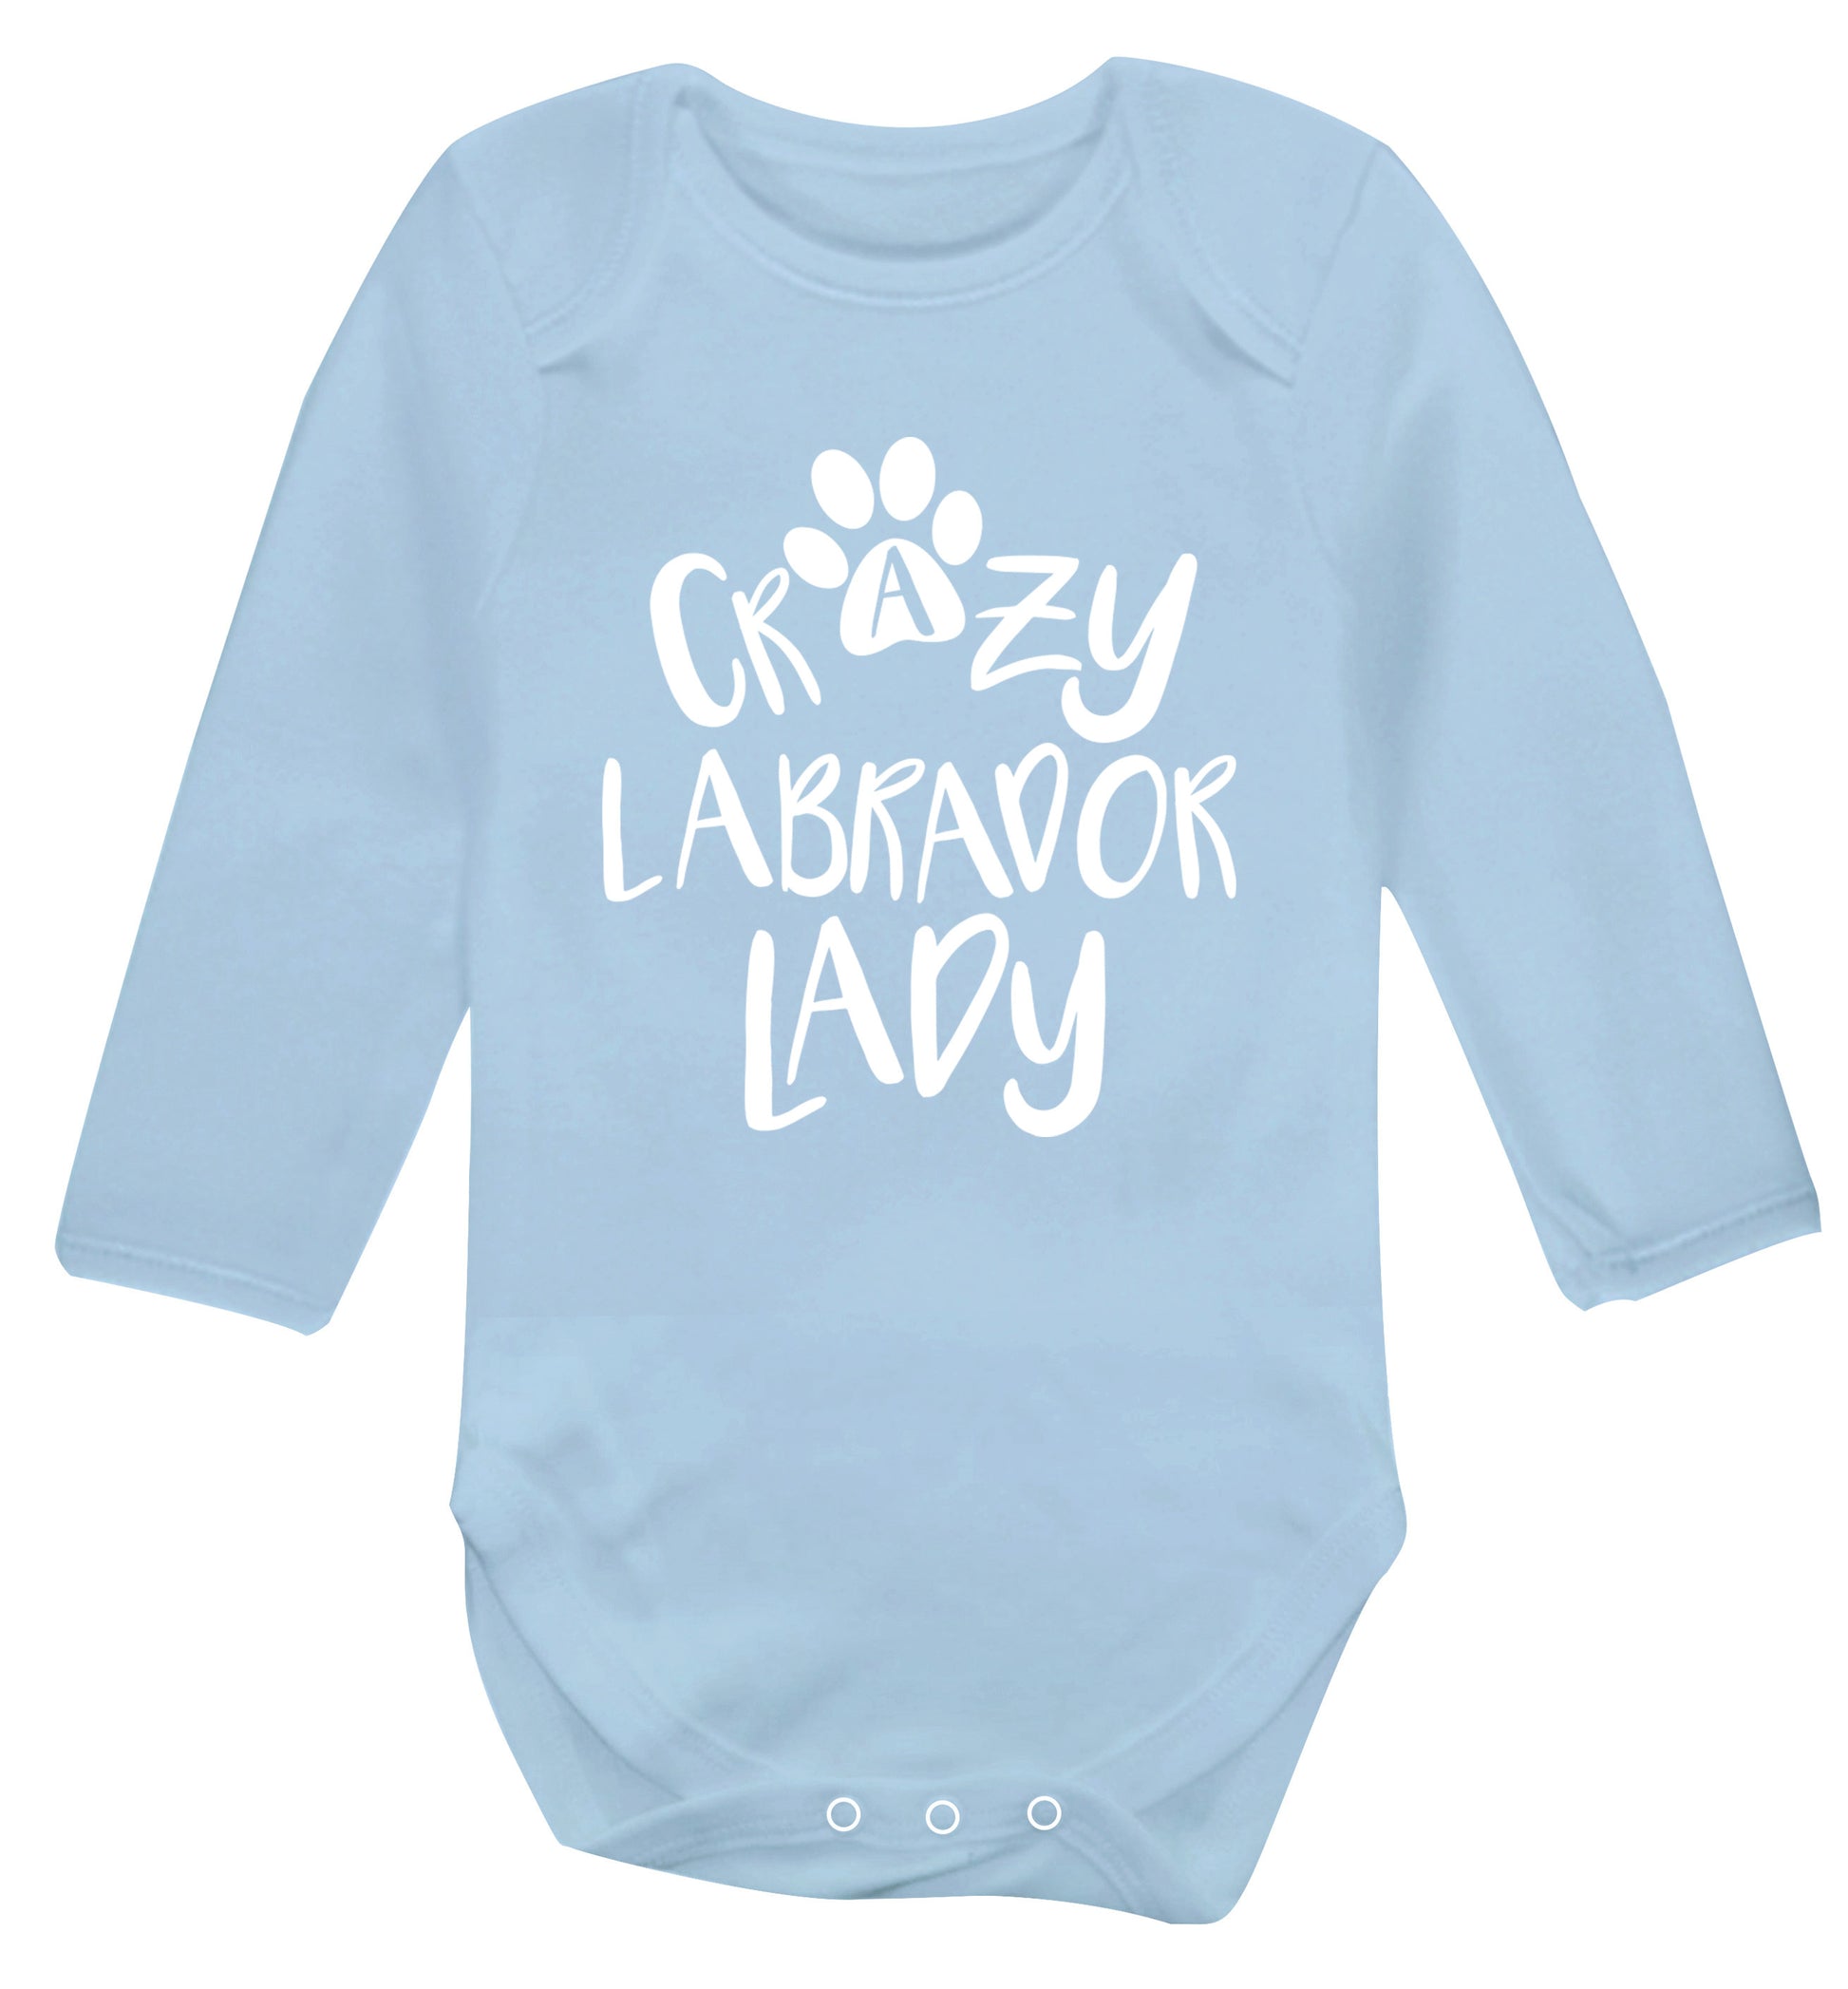 Crazy labrador lady Baby Vest long sleeved pale blue 6-12 months